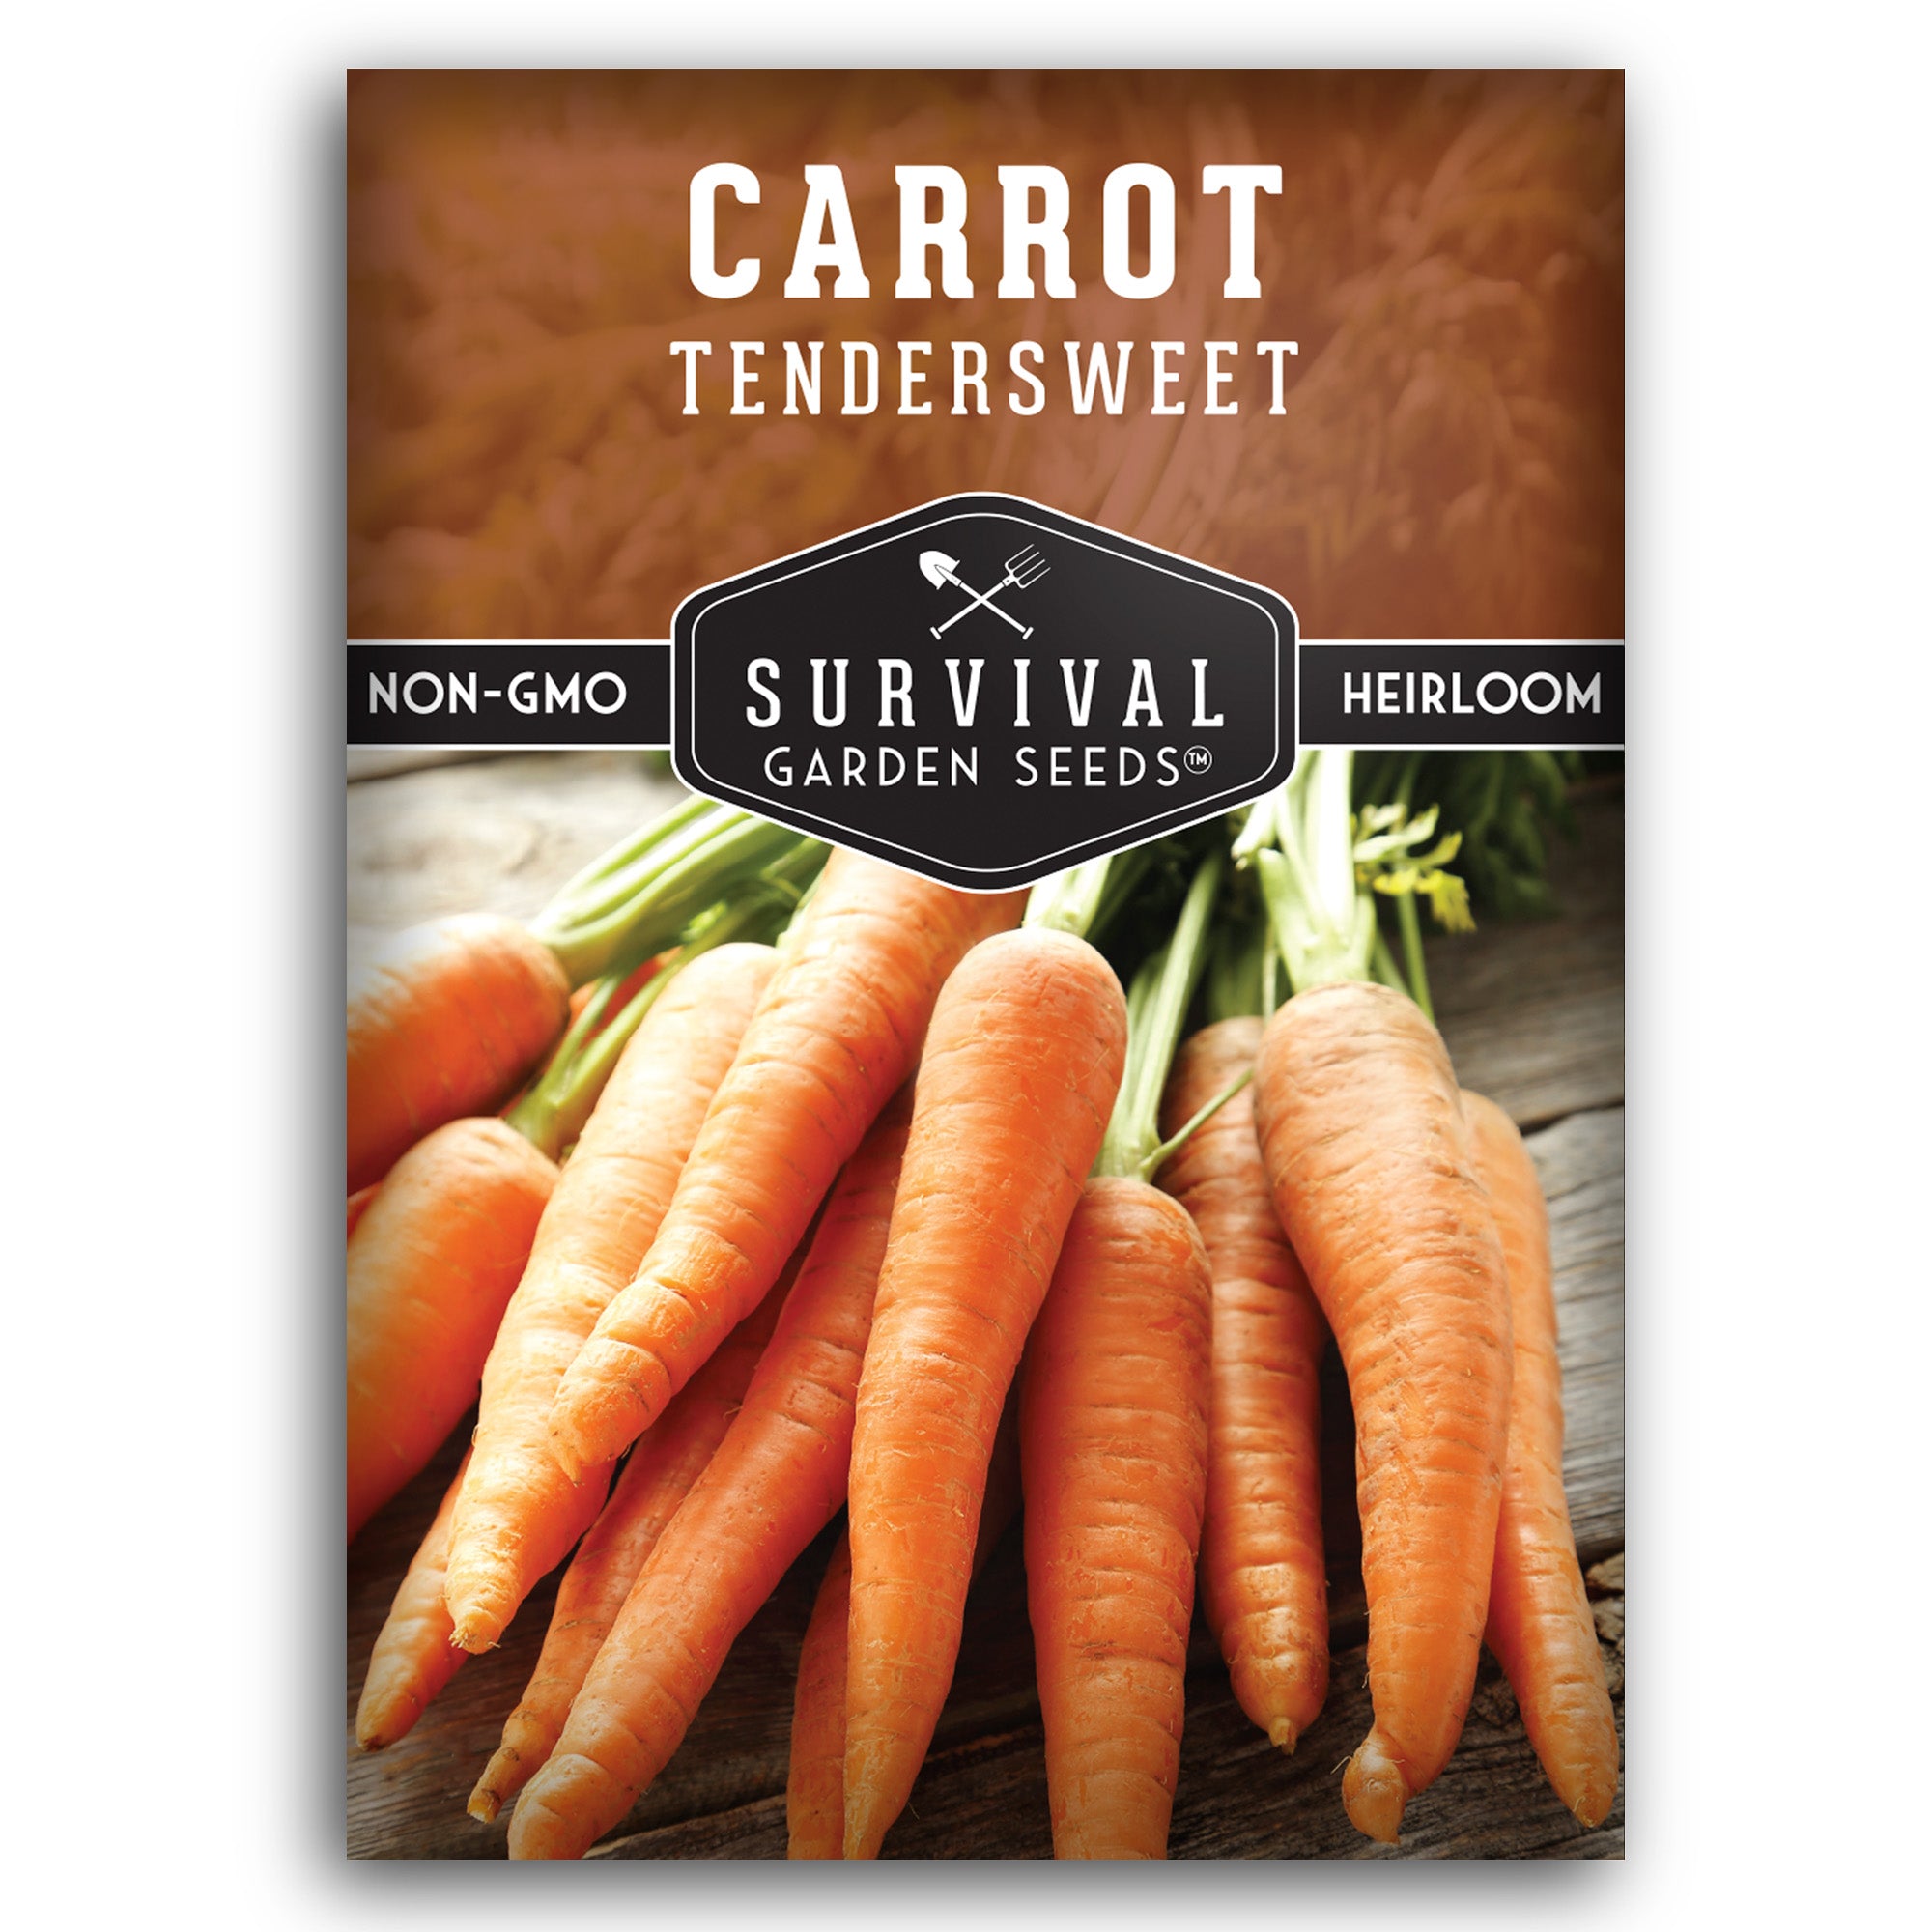 Tendersweet Carrot seeds for planting